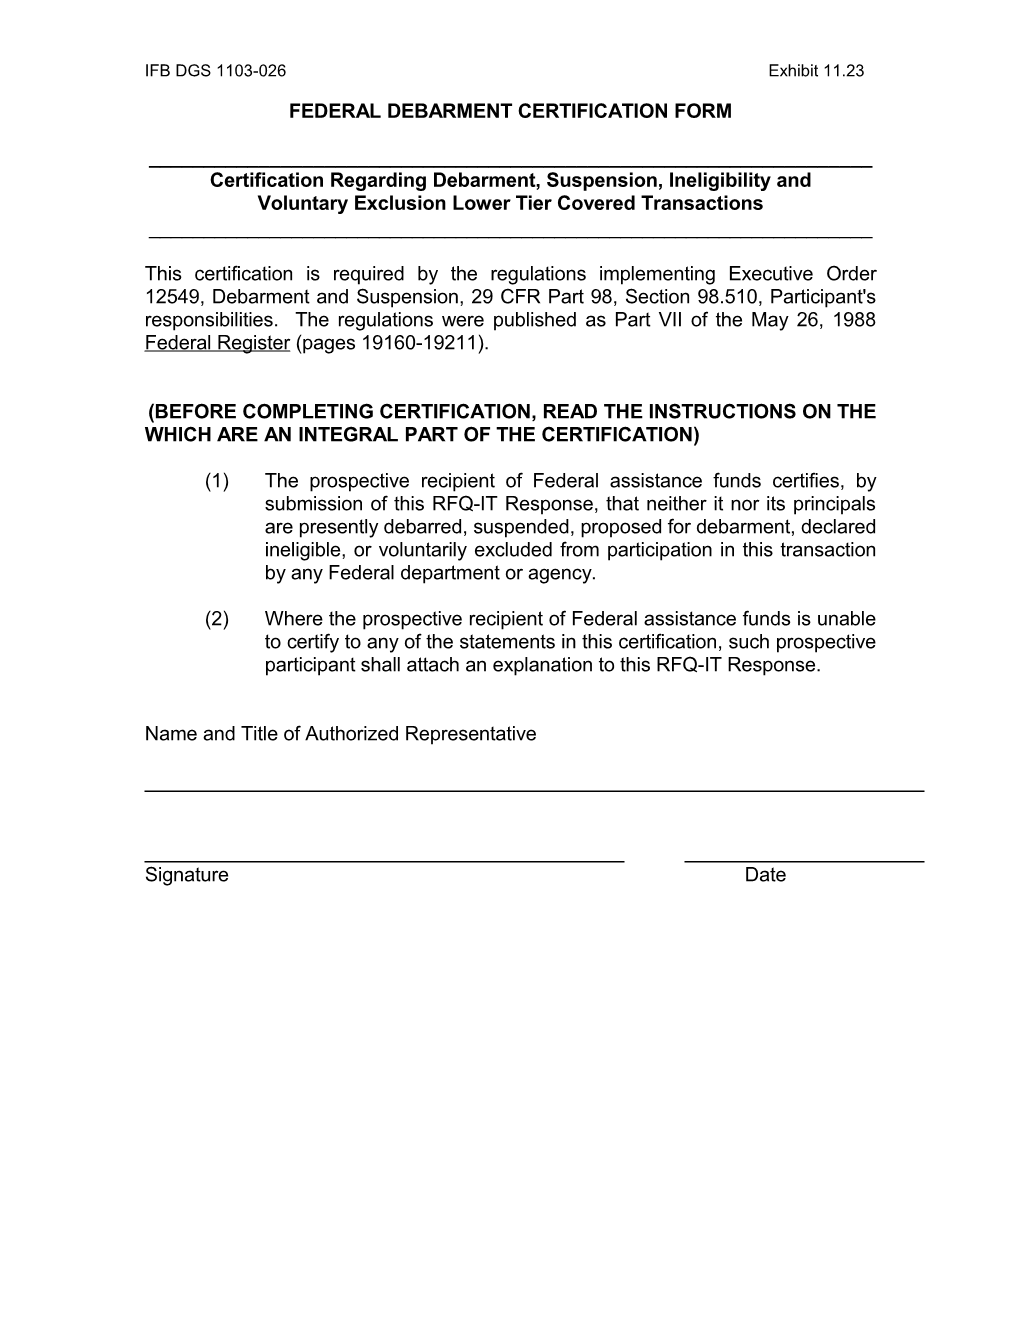 Federal Debarment Certification Form